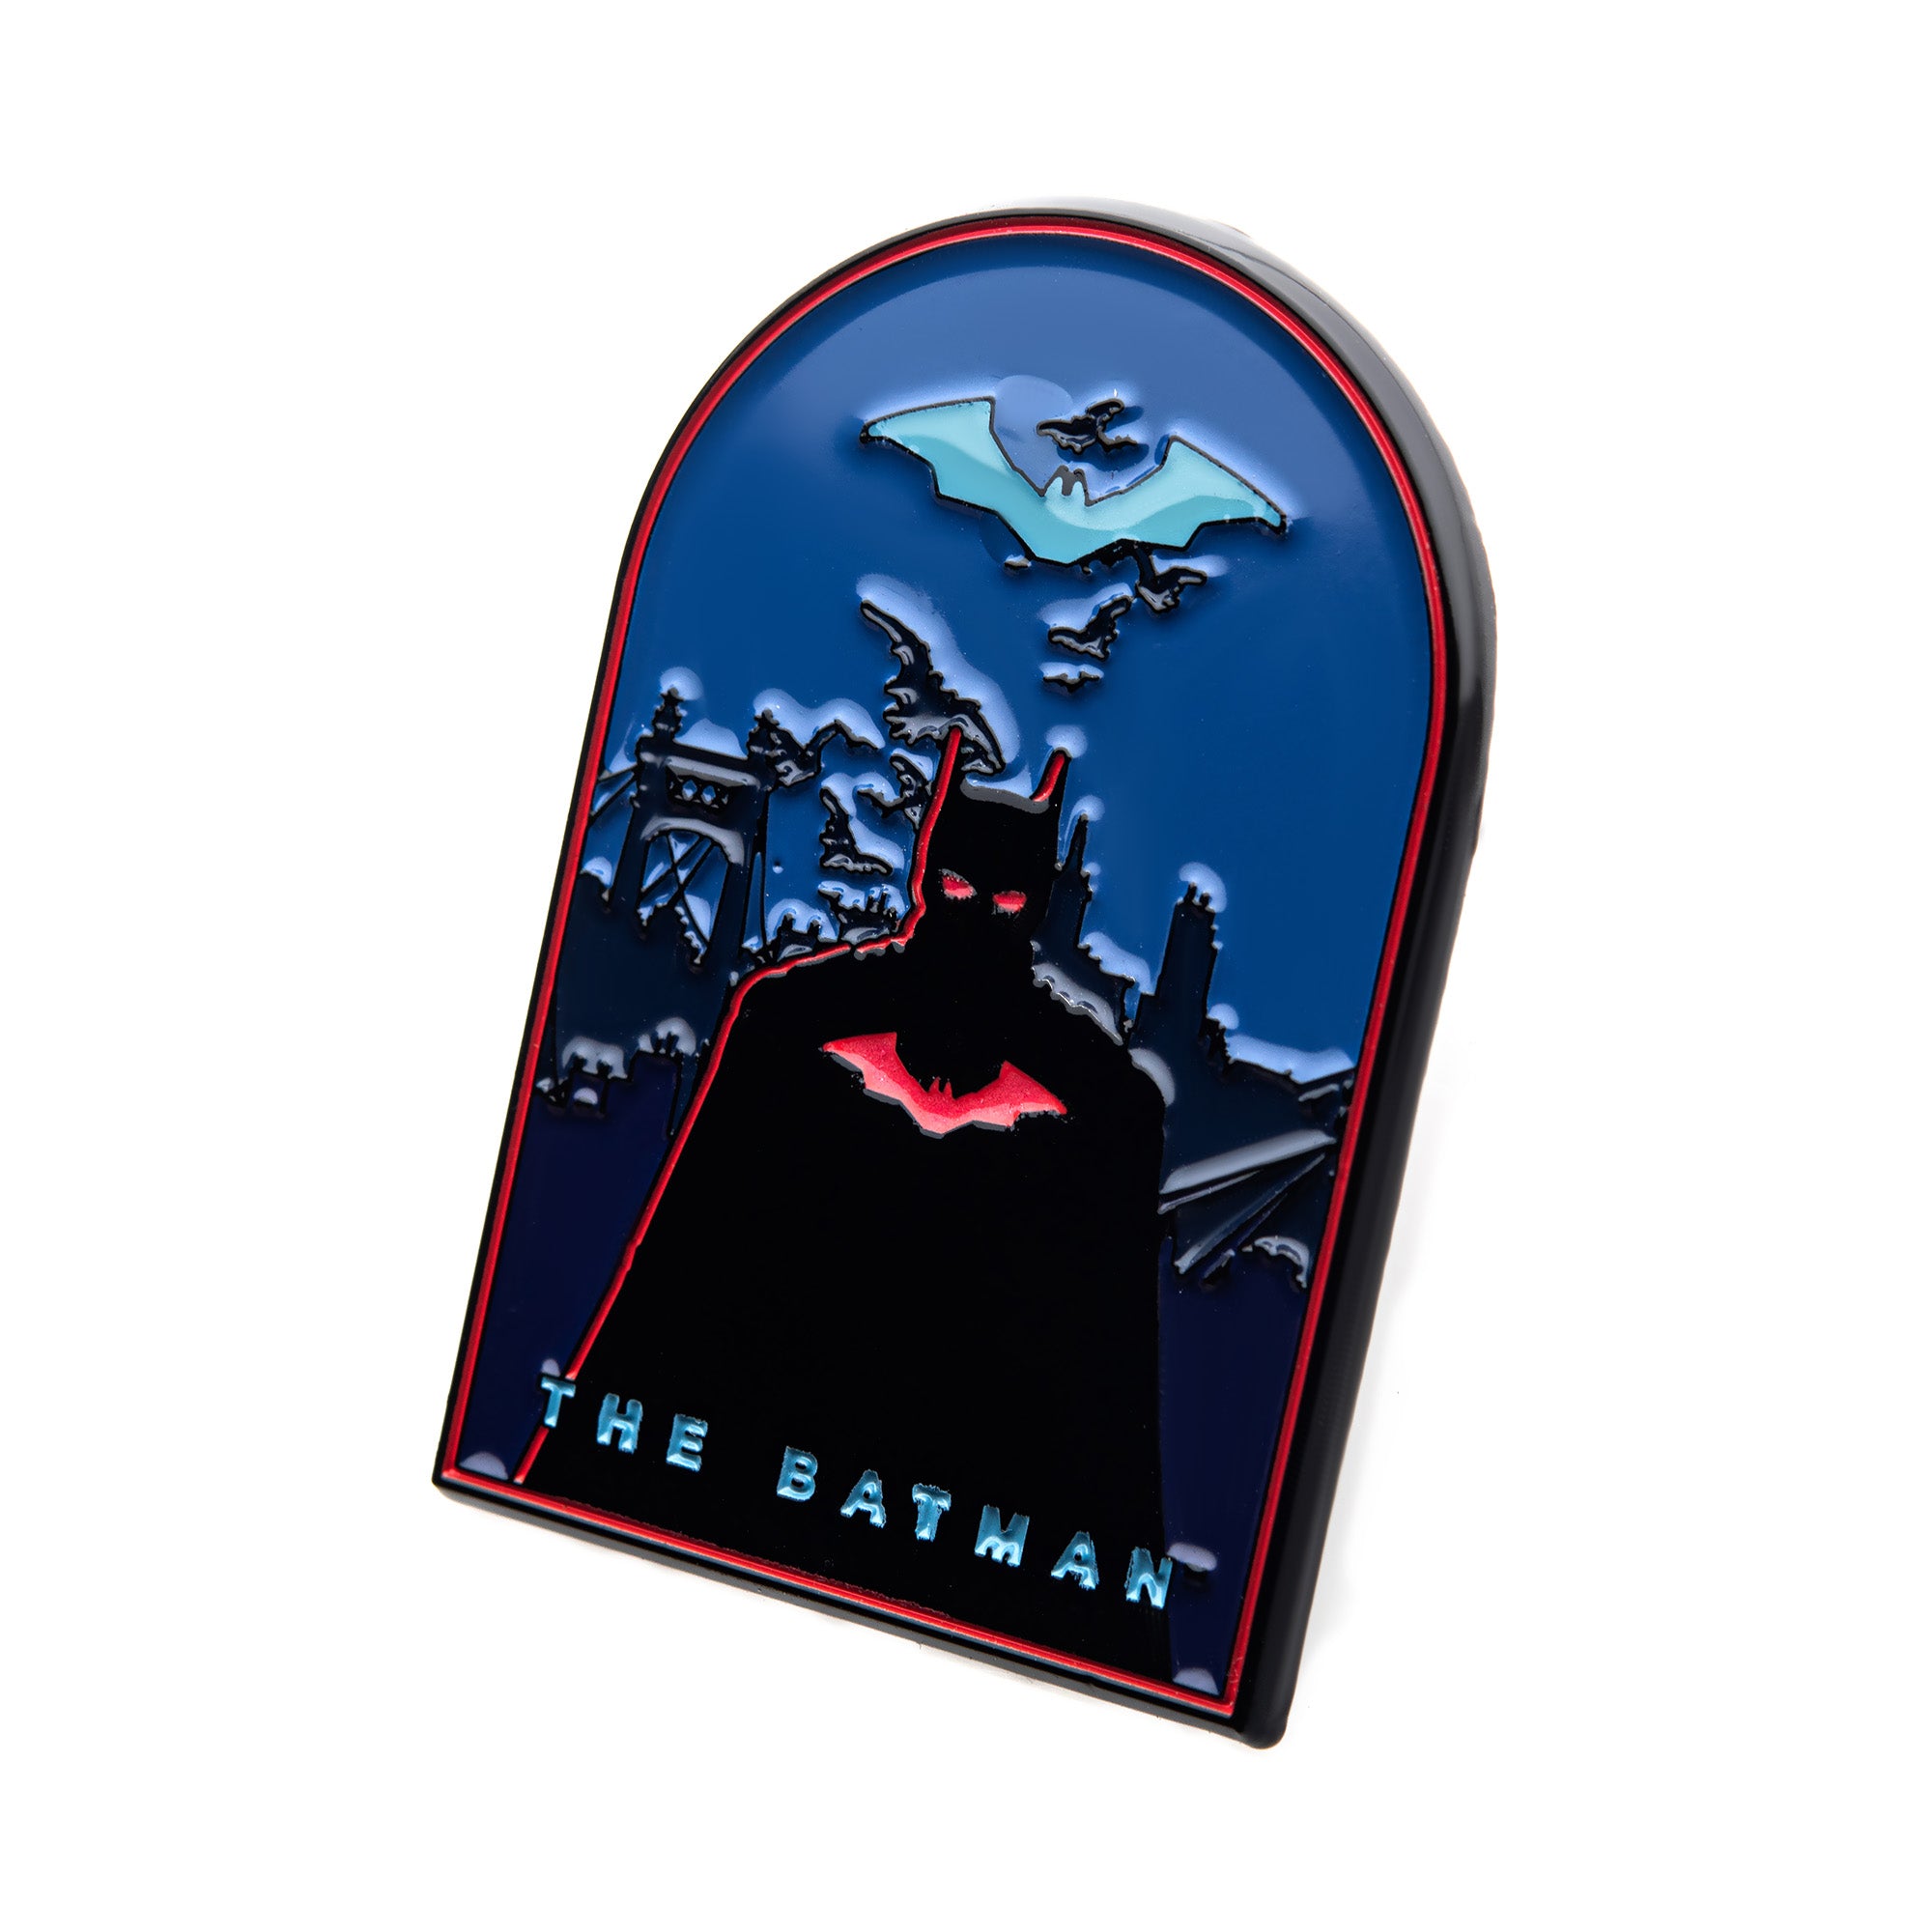 DC Comics The Batman Silhouette Glow-in-the-Dark Enamel Pin